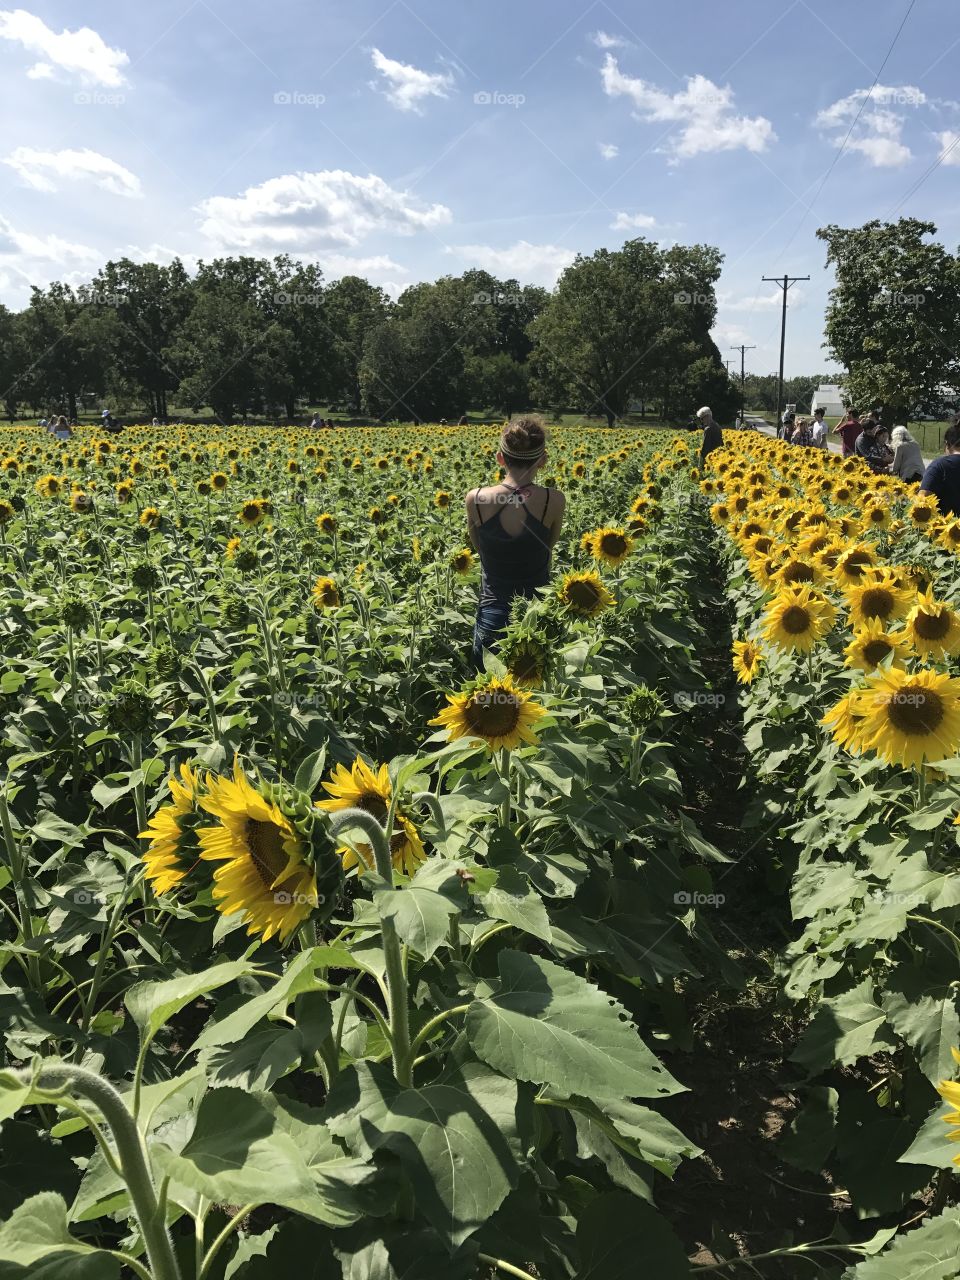 Girl walking through a sunflower field in rural Ohio in 2017